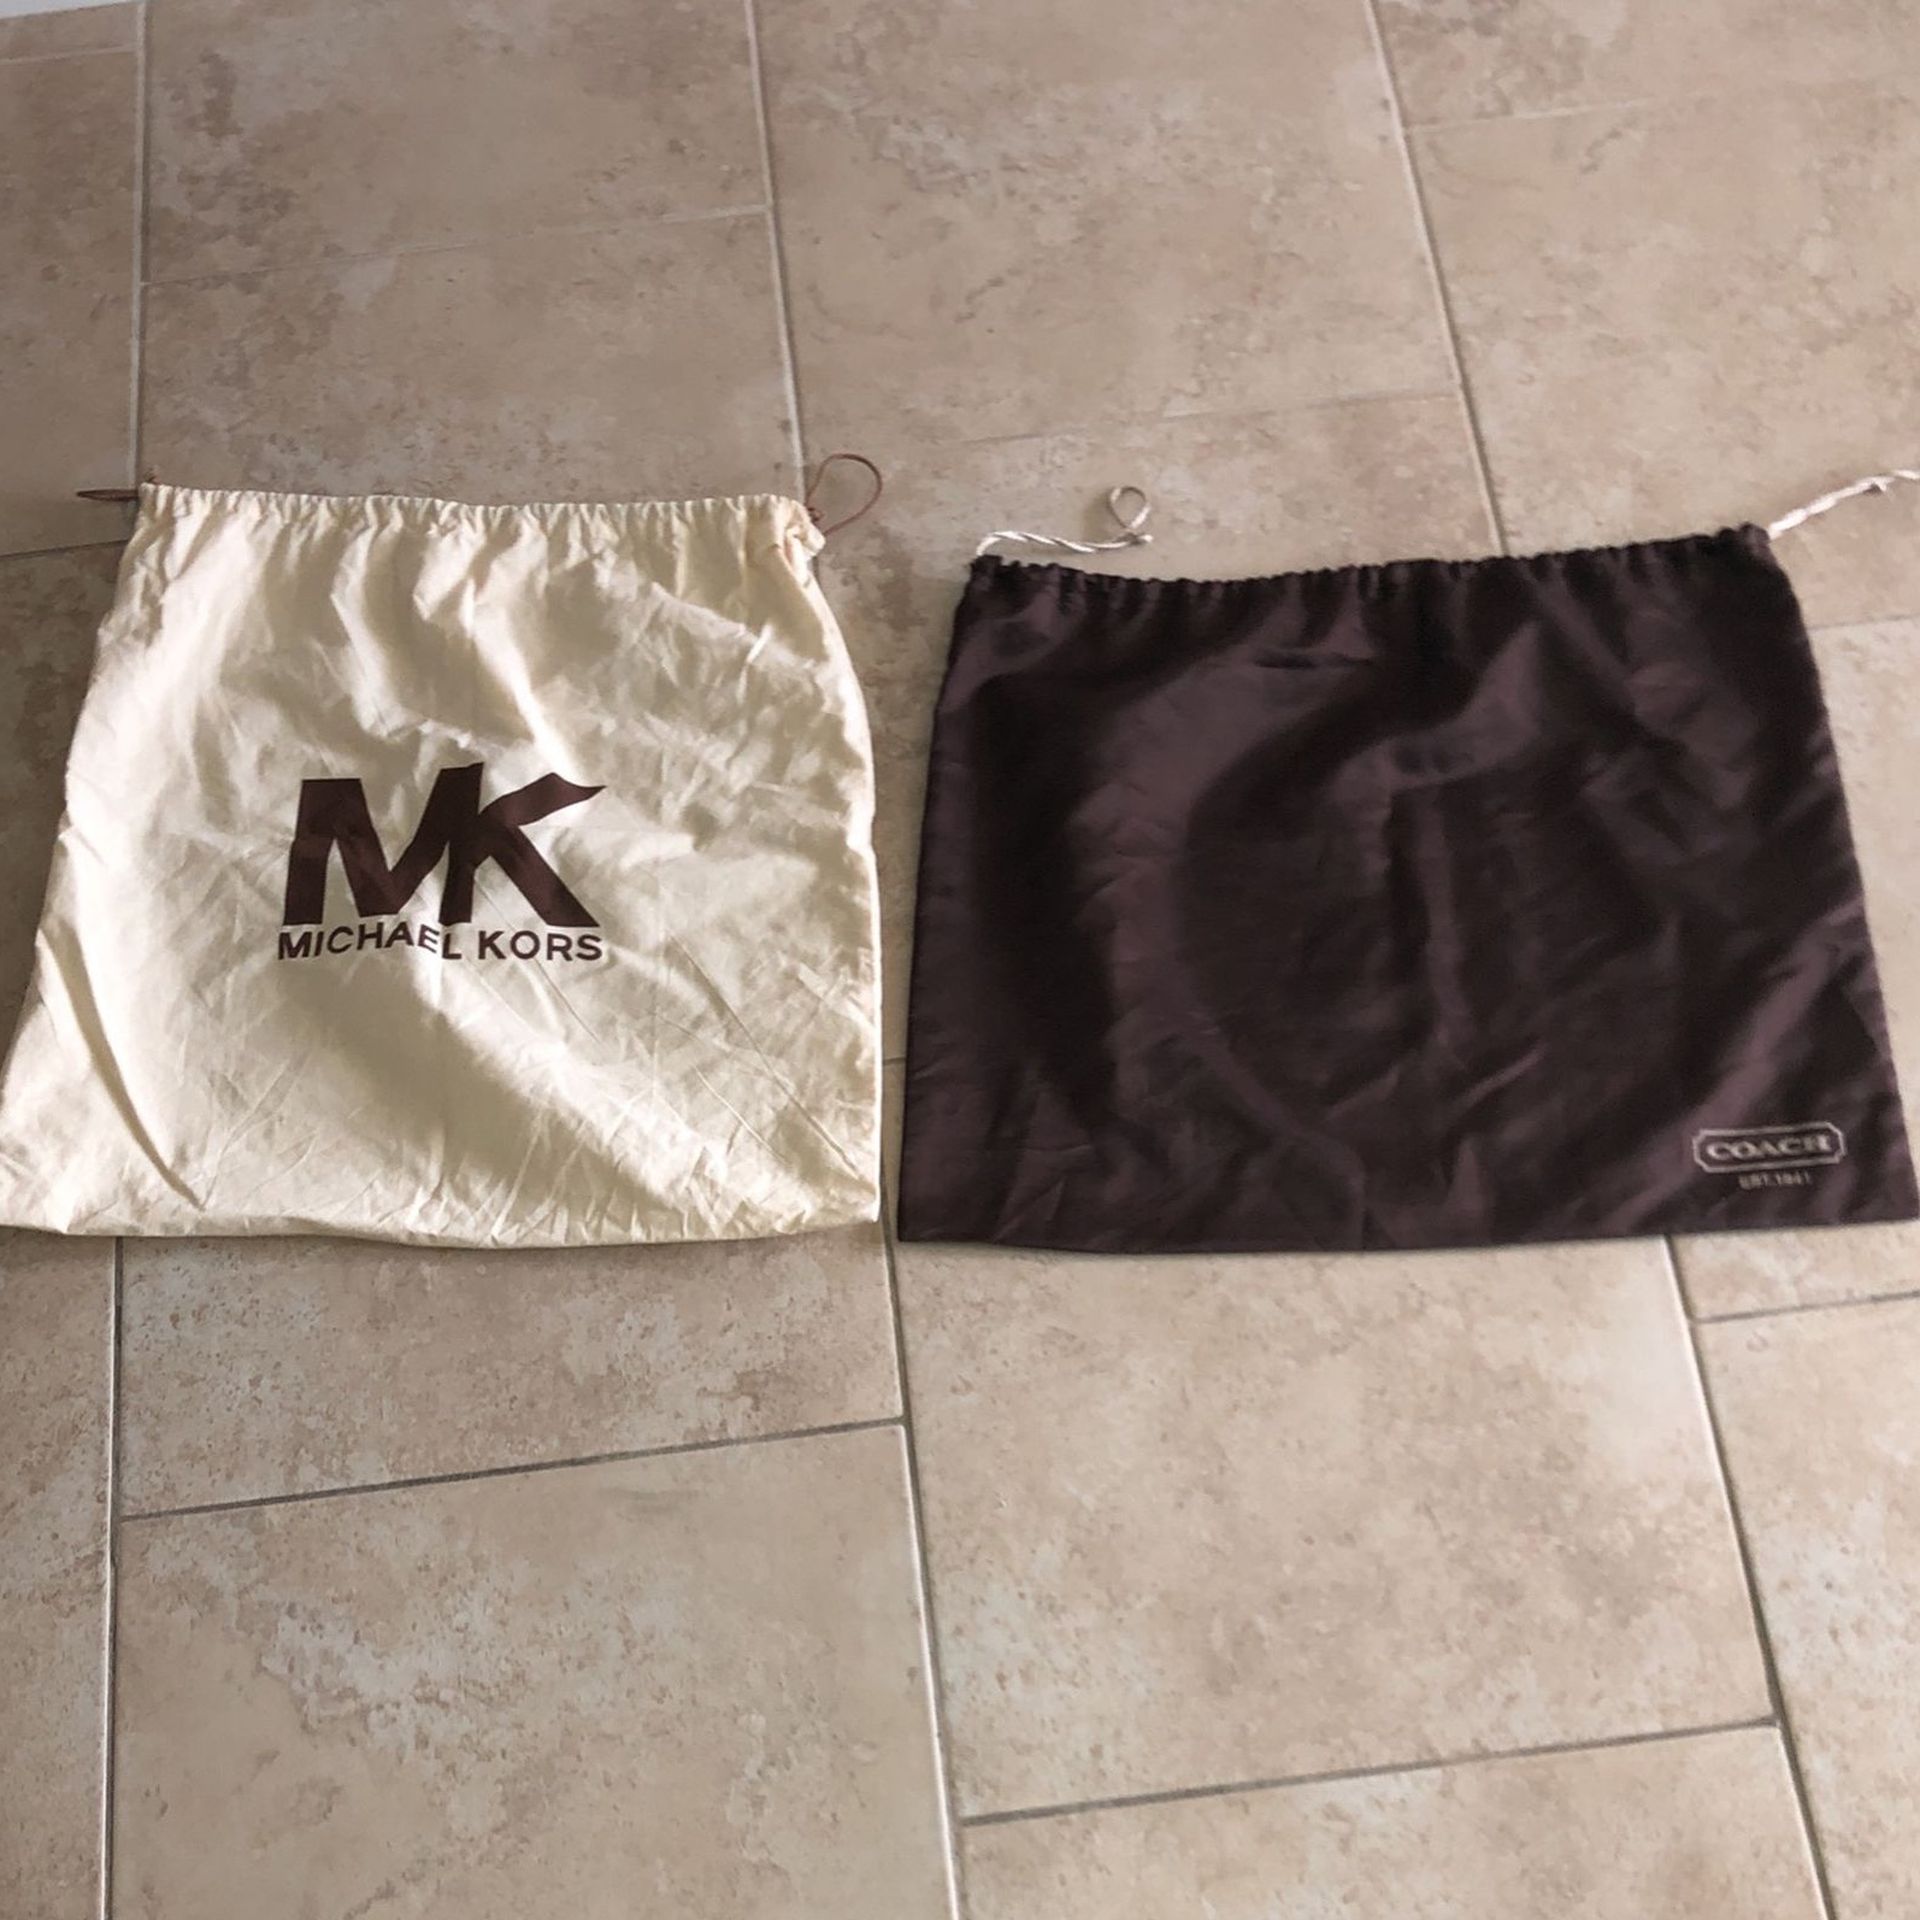 Free Coach & MK Cover Bags